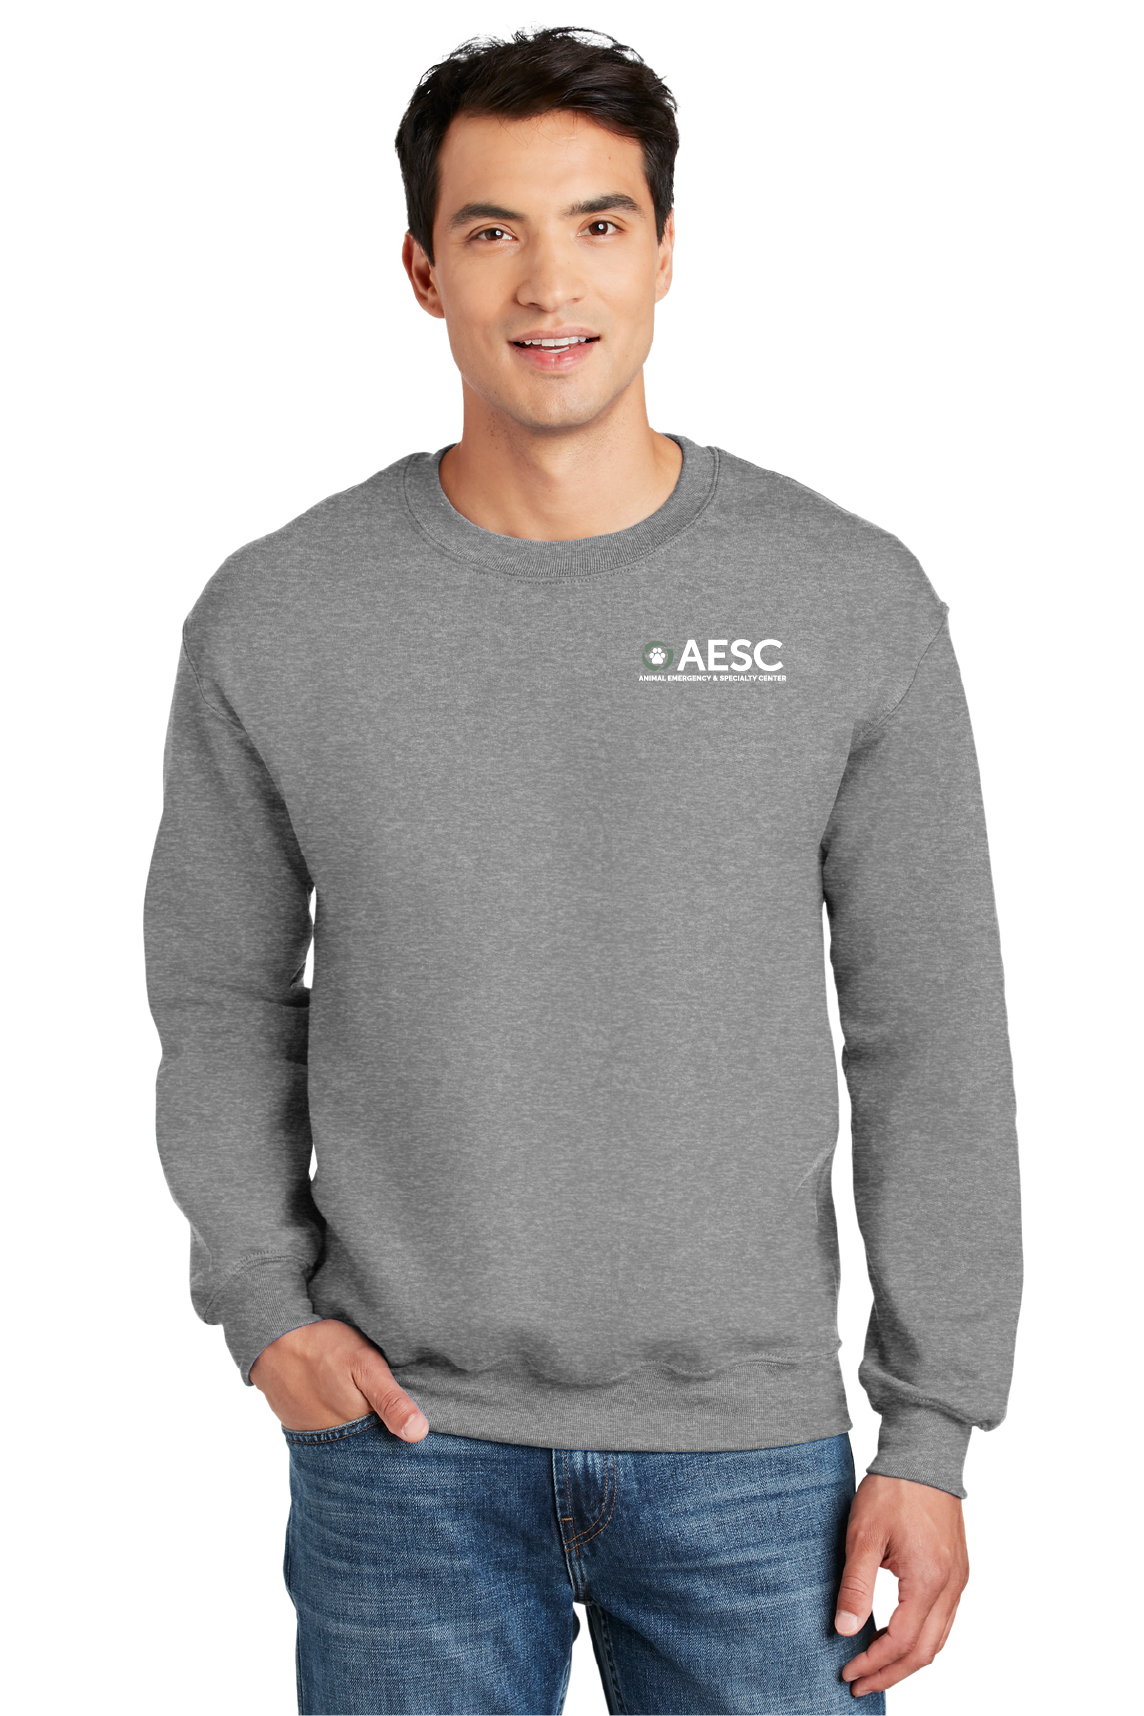 AESC Men’s Gildan Sweatshirt Sports Grey